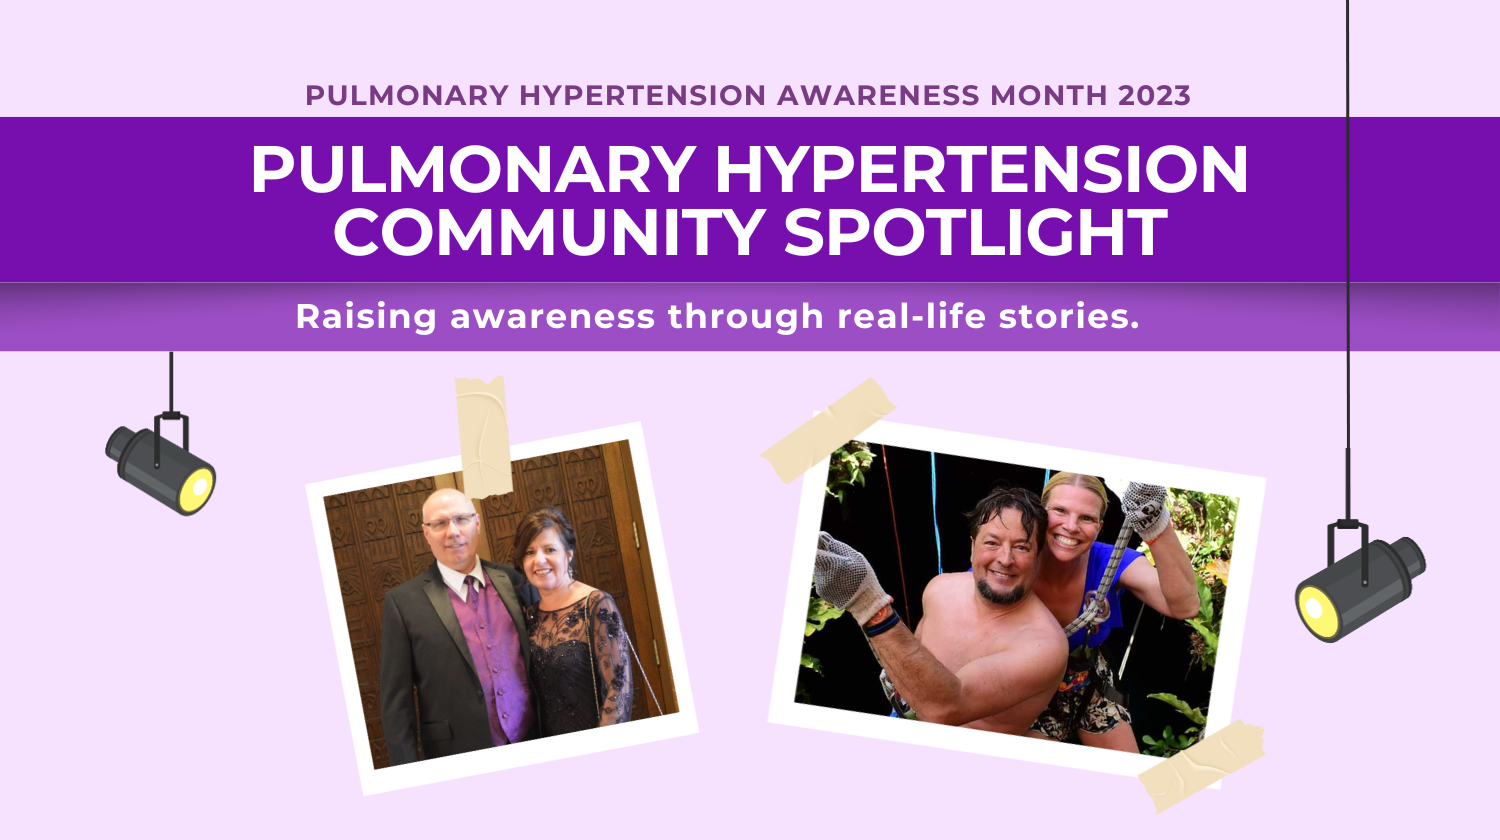 An illustration for November's Community Spotlight on people living with pulmonary hypertension.